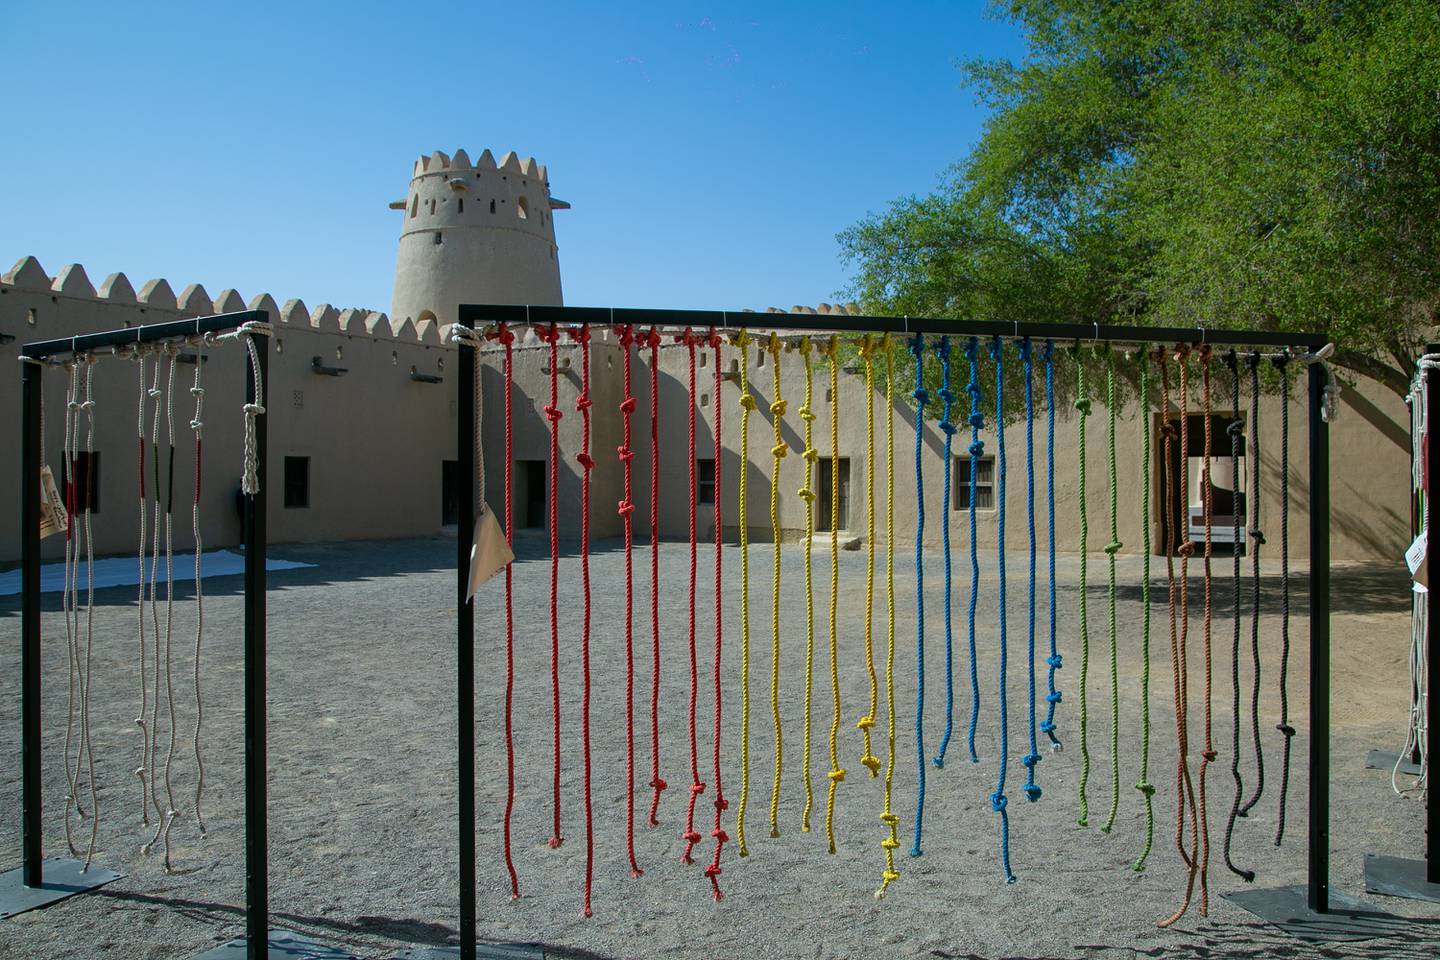 Emirati artist Abdullah Al Saadi's Quipu Alphabet, inspired by the Incan writing system, is on display at Al Ain’s Al Jahili Fort. Photo: Abu Dhabi Art